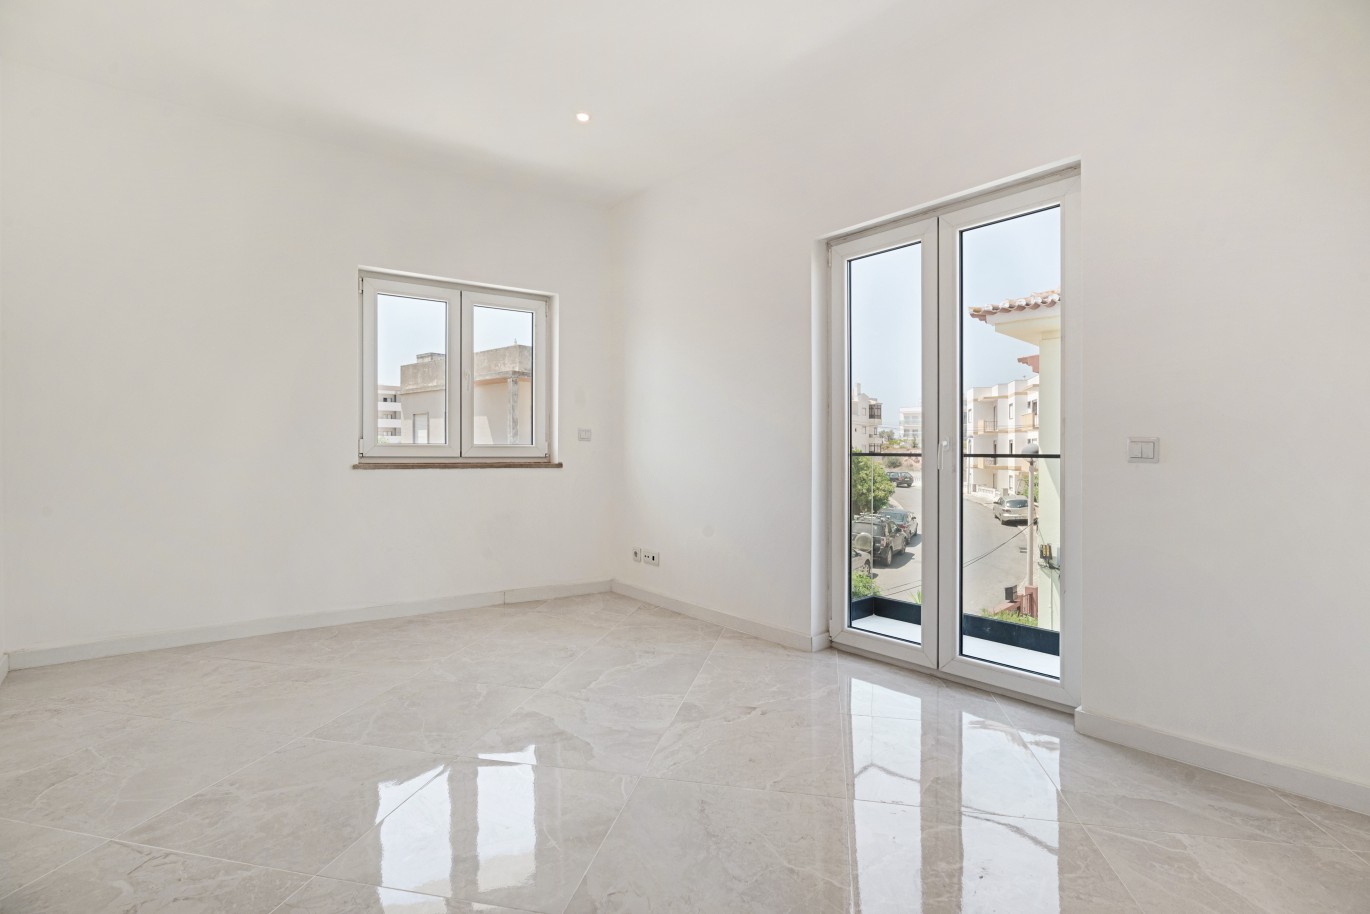 6 bedroom semi-detached villa for sale in Portimão, Algarve_231208